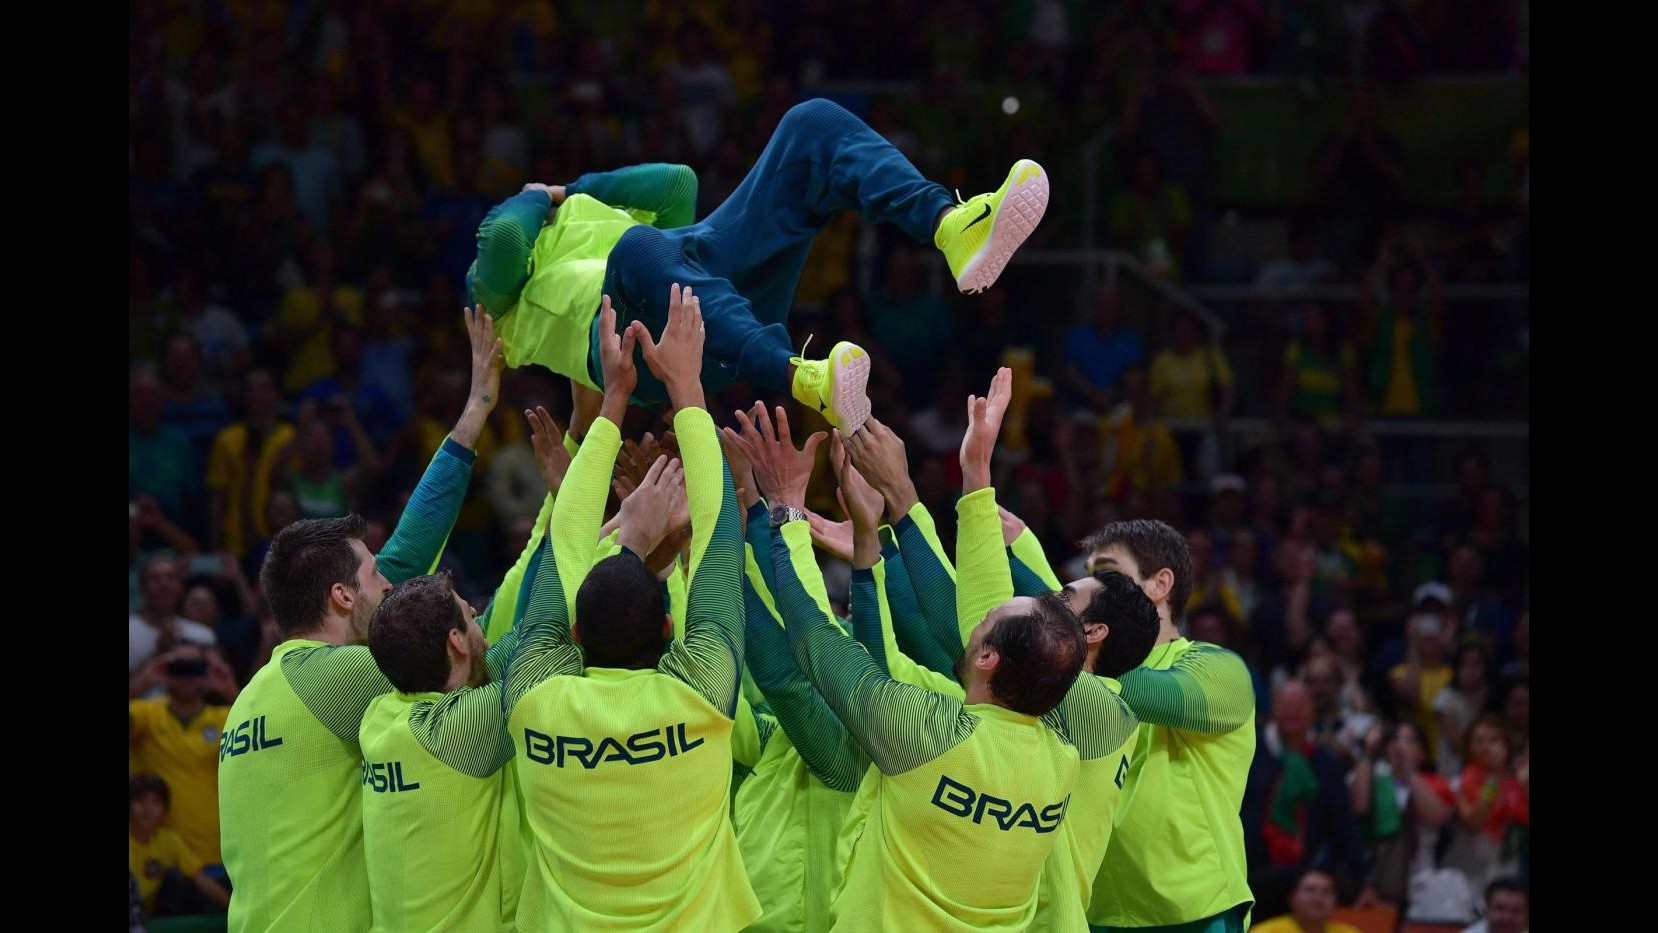 Rio, l’Italvolley si arrende al Brasile in finale: è argento